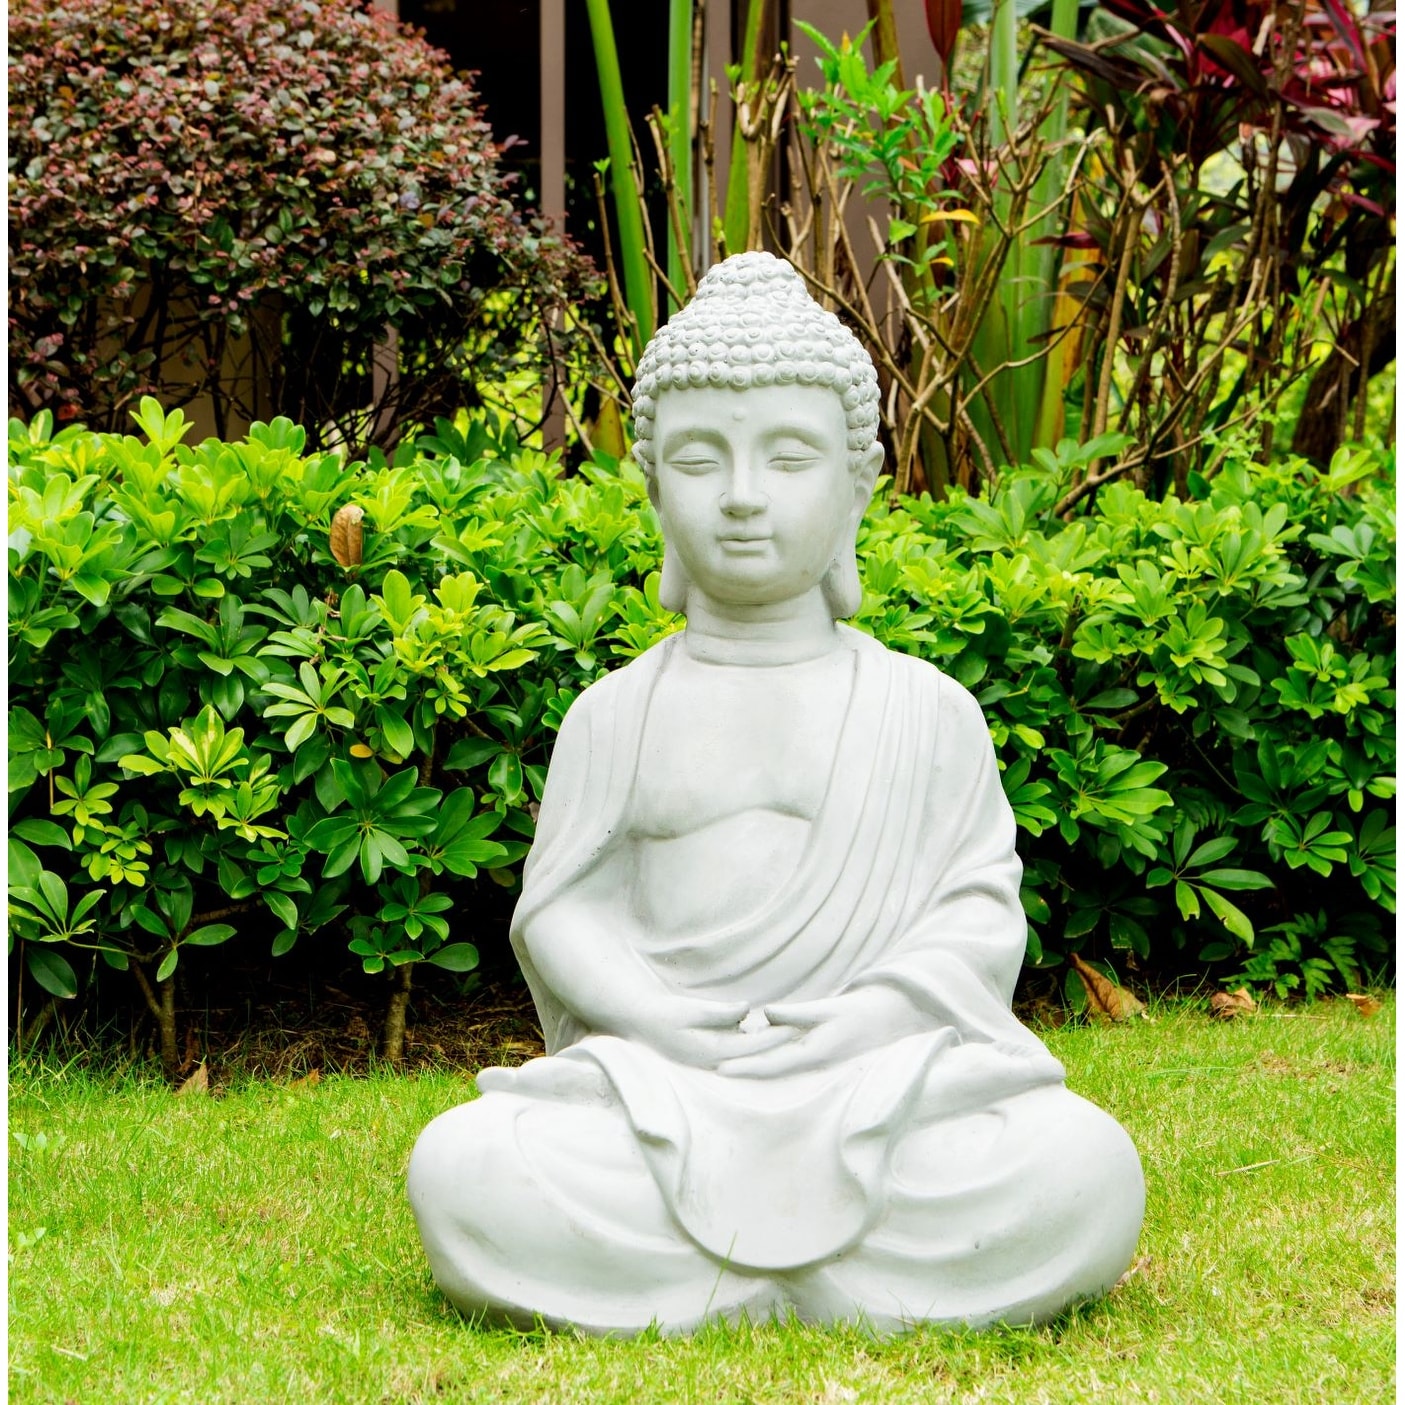 Sitting Buddha Garden Outdoor Indoor Home Decor Ornament Small Statue 